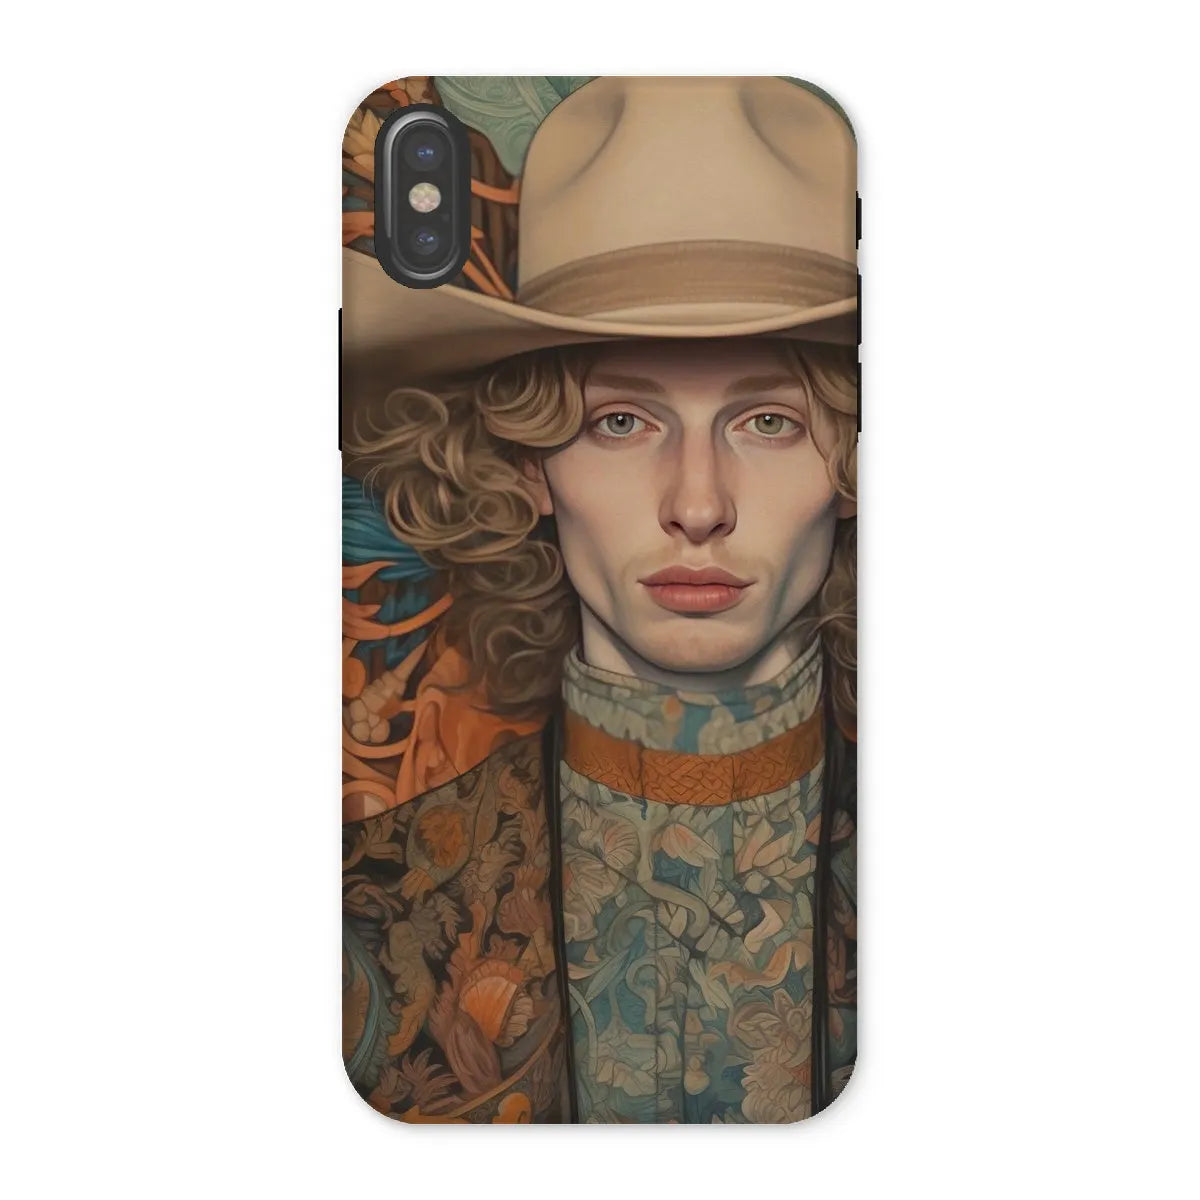 Reuben The Gay Cowboy - Dandy Gay Men Art Phone Case - Iphone x / Matte - Mobile Phone Cases - Aesthetic Art